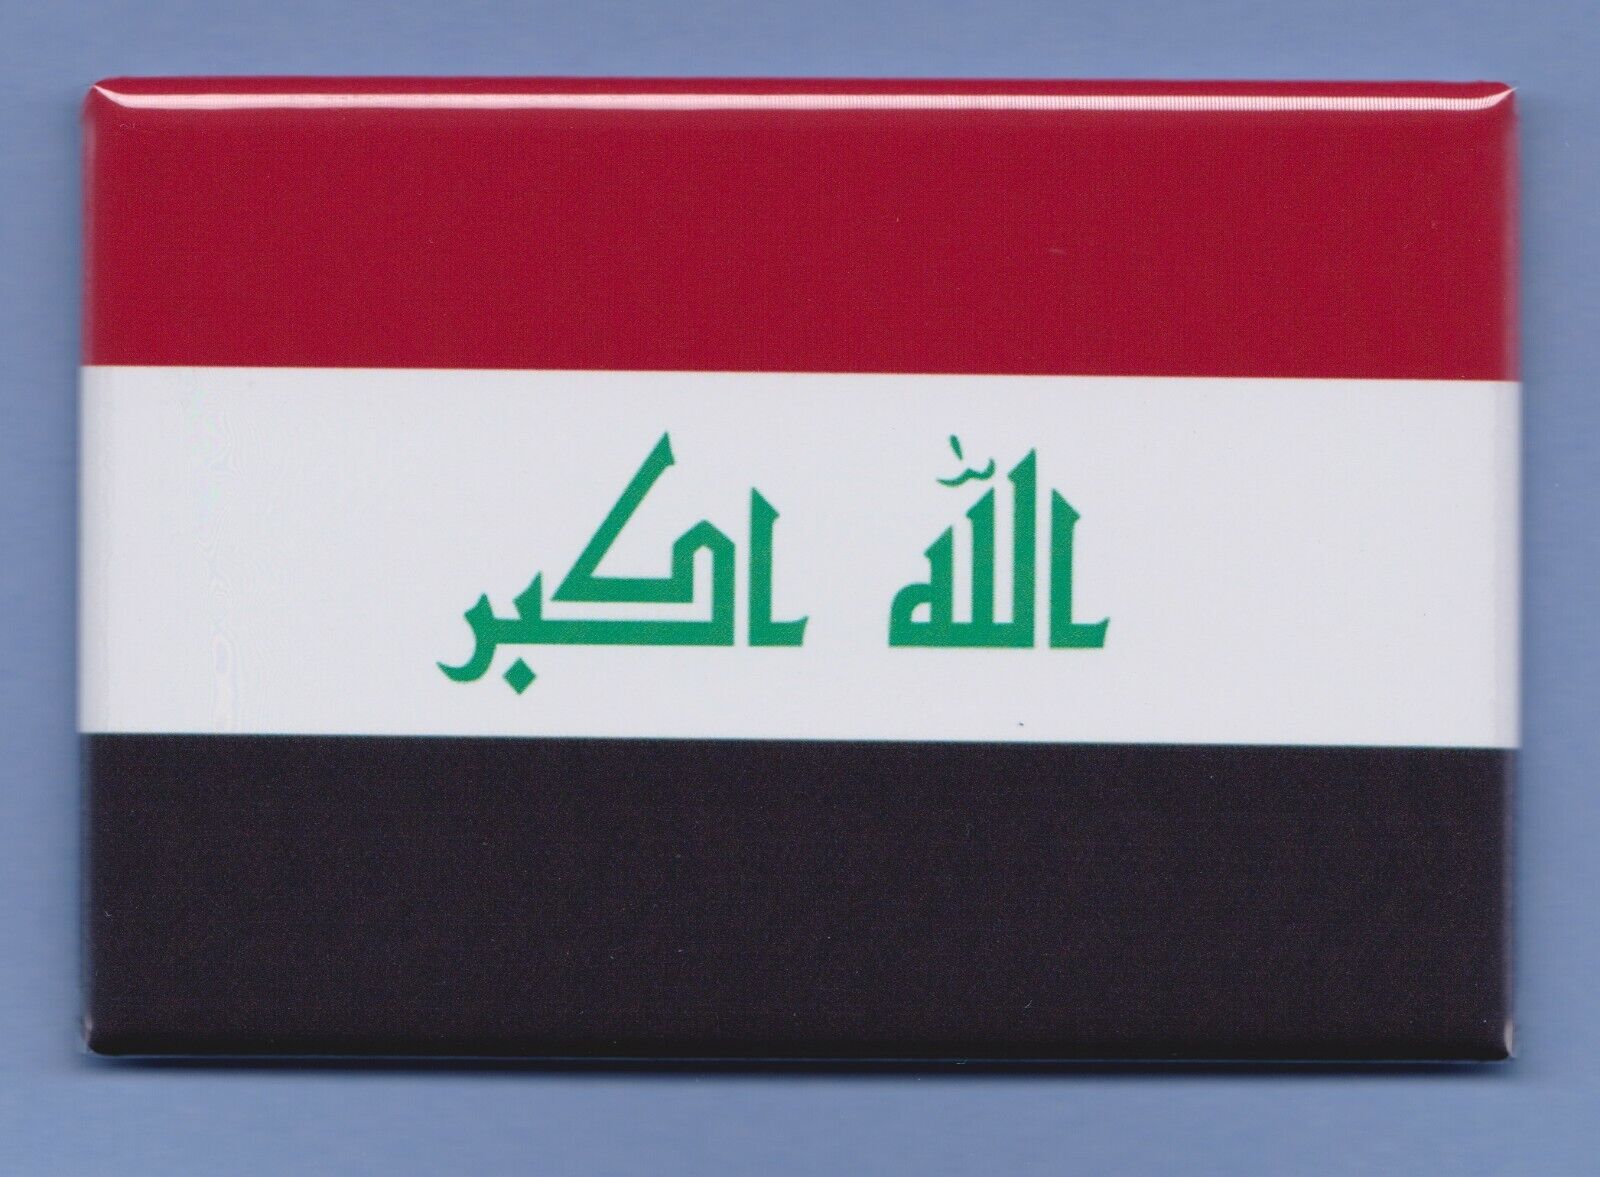 IRAQ *2X3 FRIDGE MAGNET* FLAG BANNER NATIONAL SYMBOL DESIGN COLOR COUNTRY